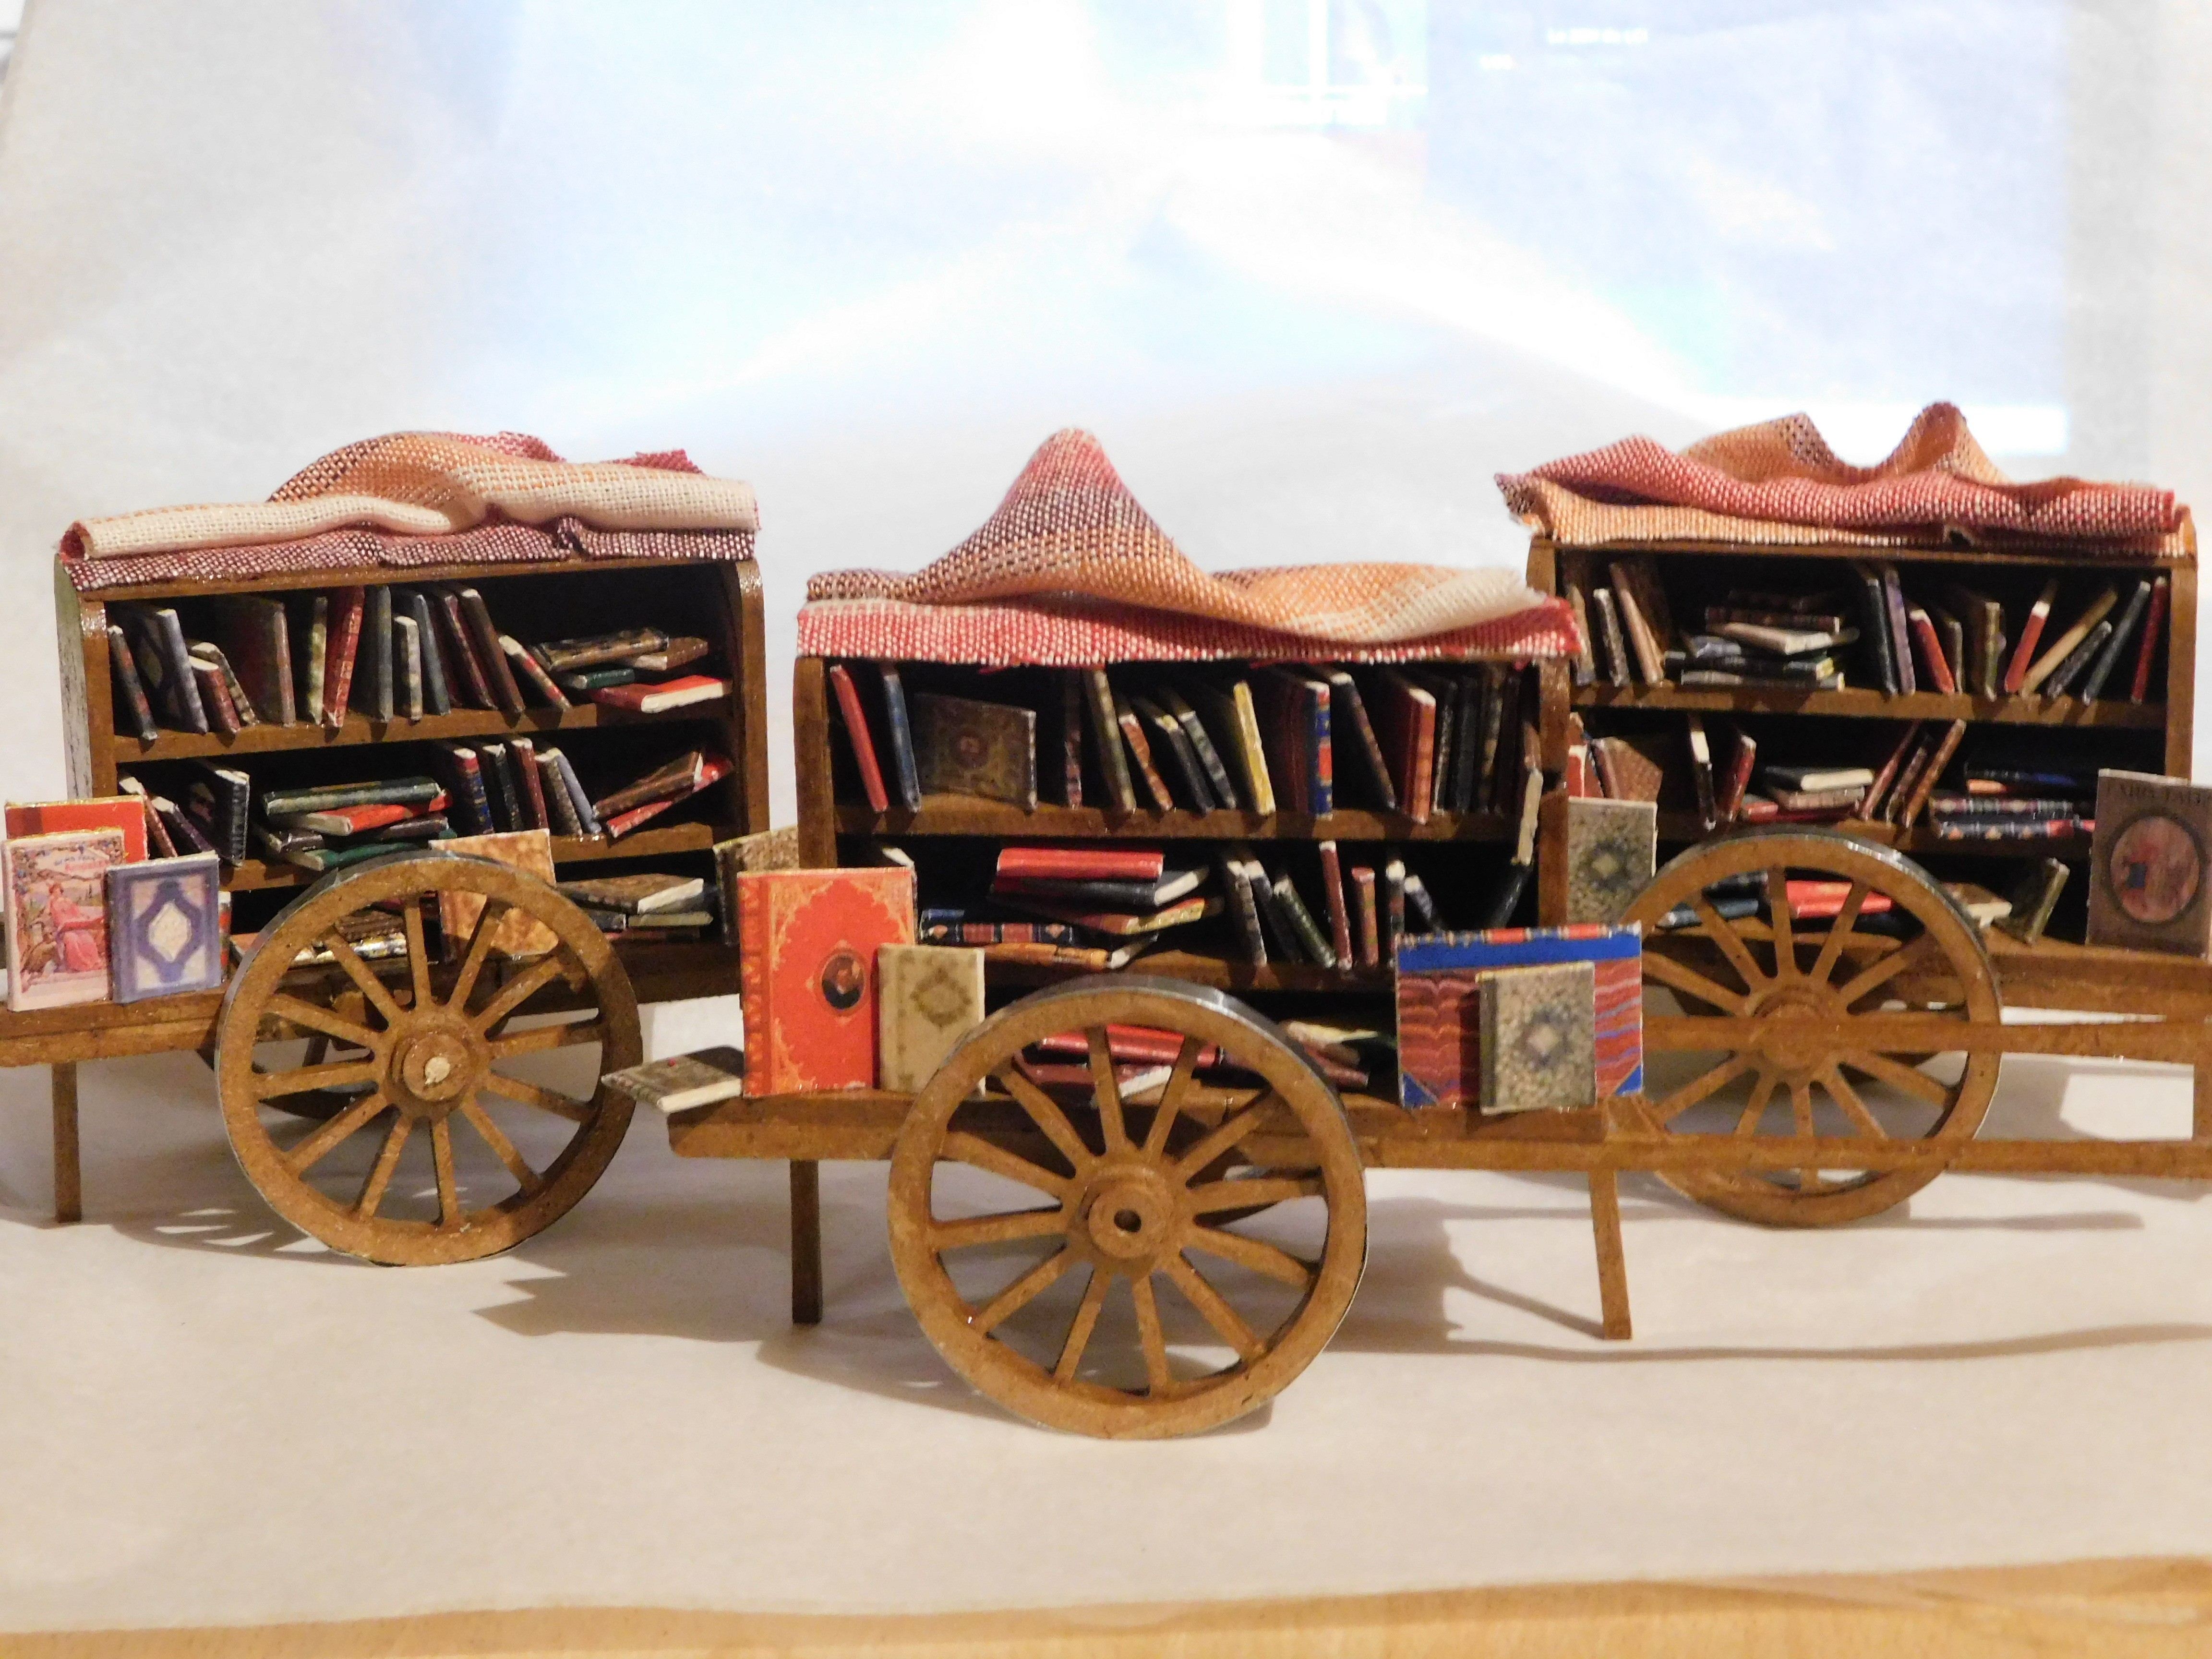 Les Miniatures de Didange -CartridgeWorld Annemasse